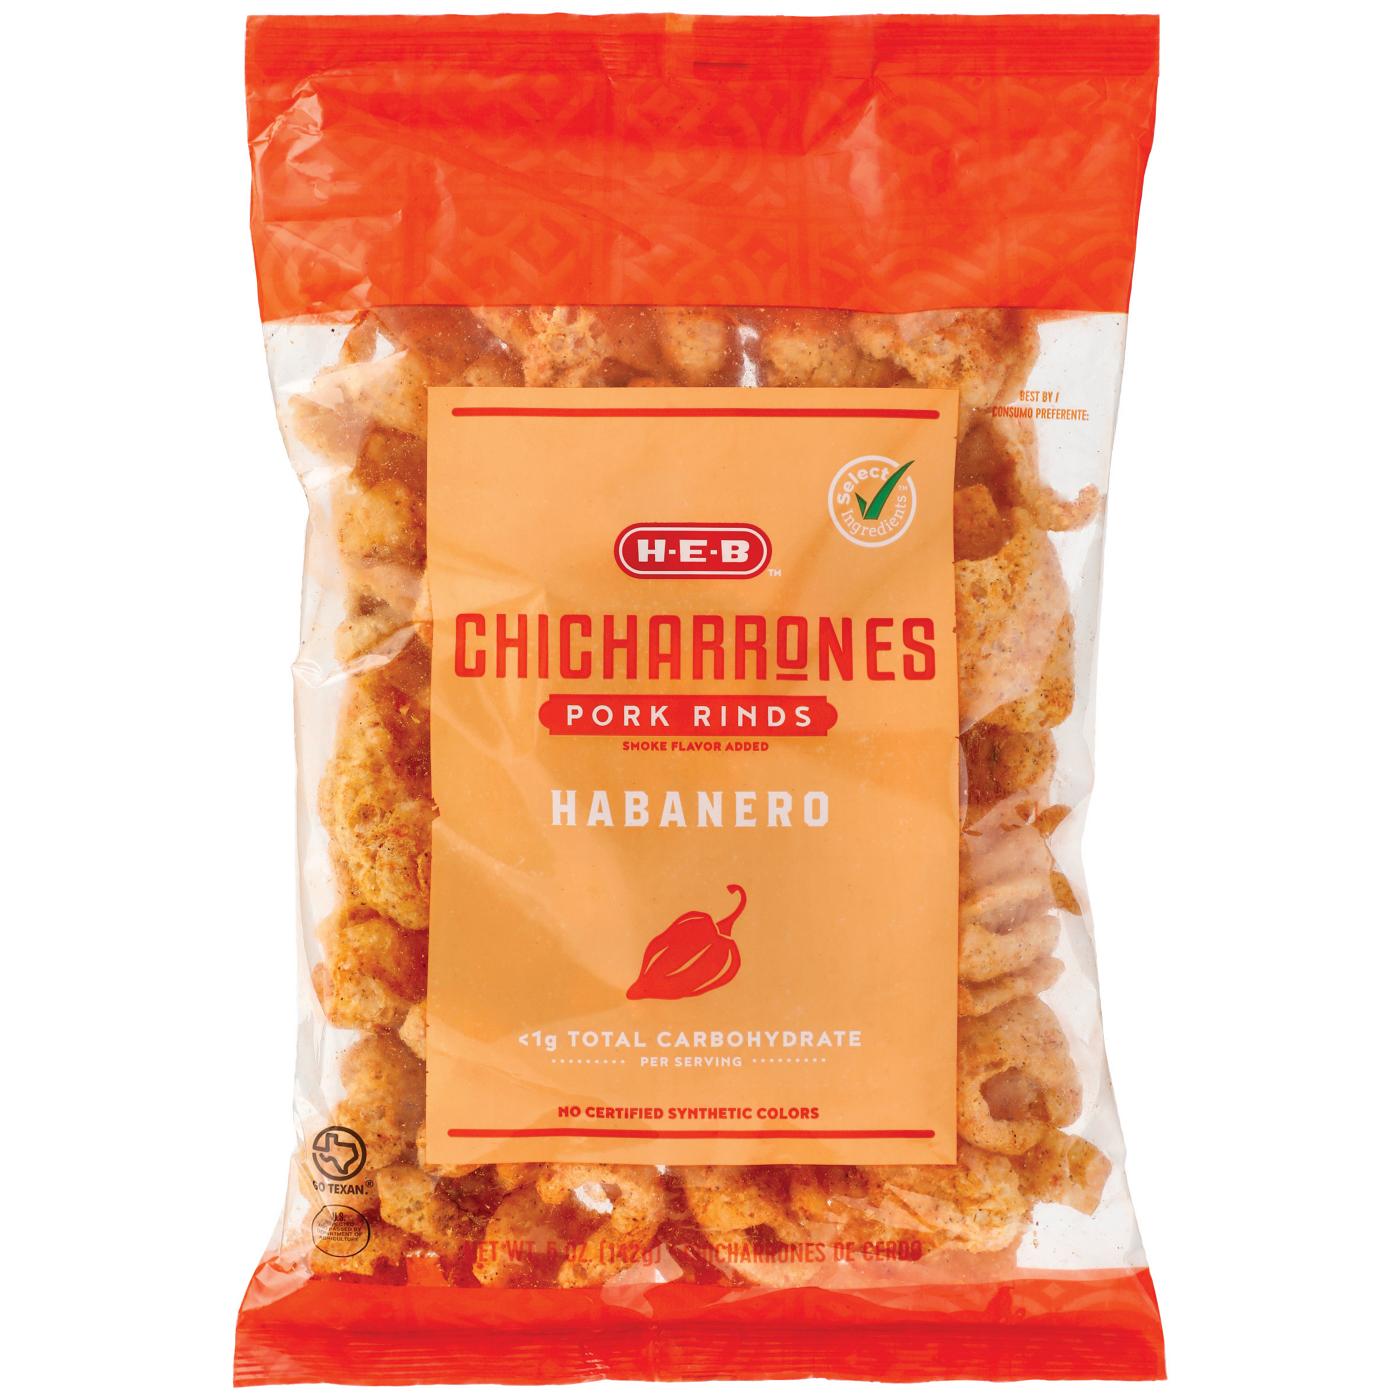 H-E-B Chicharrones Pork Rinds - Habanero; image 1 of 2